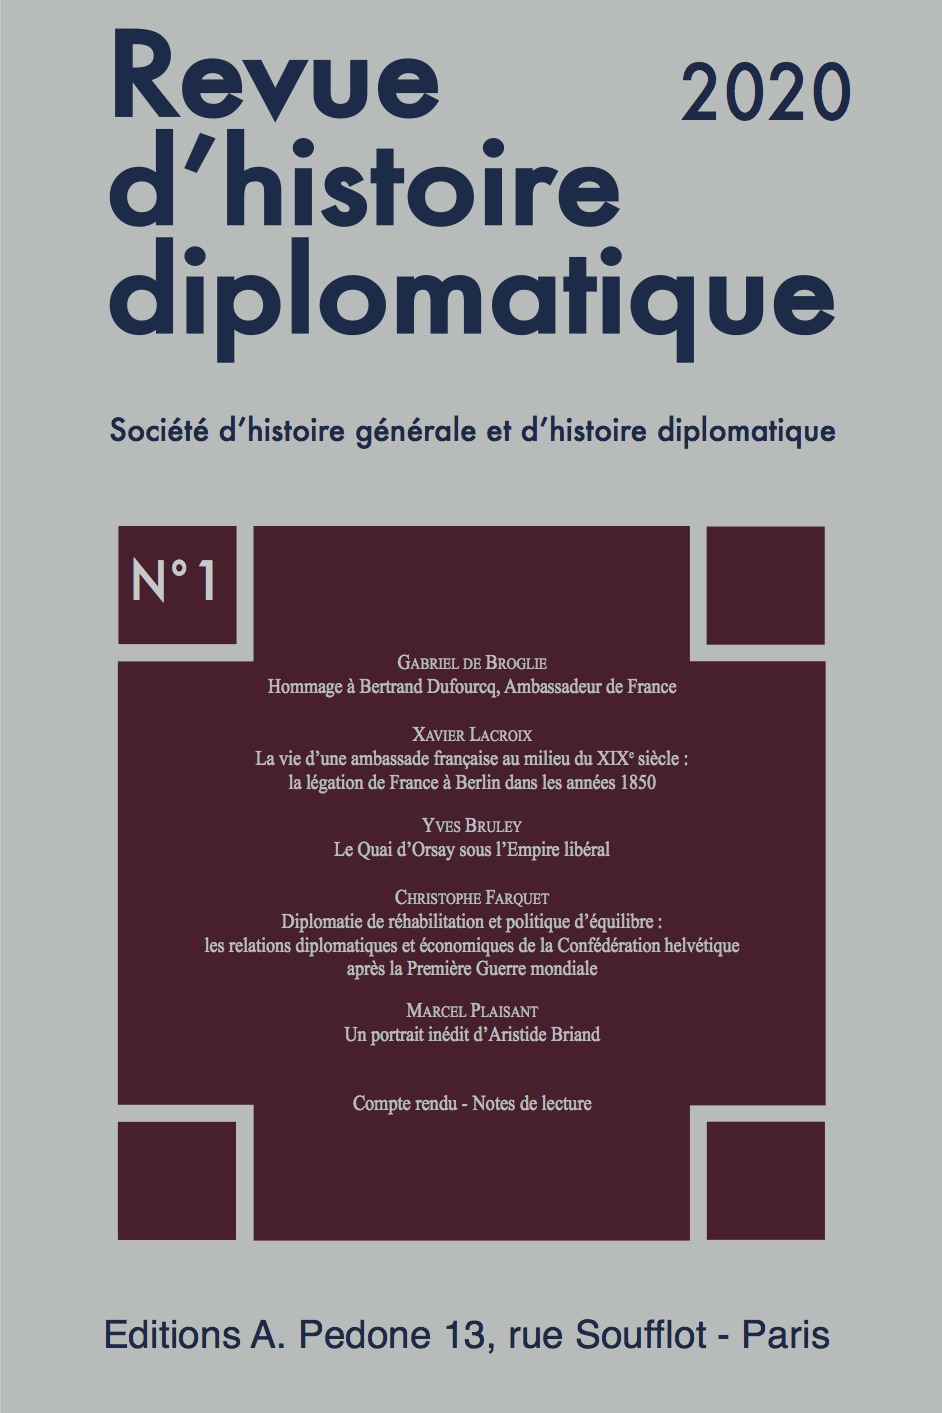 La Diplomatie-monde - Editions Pedone